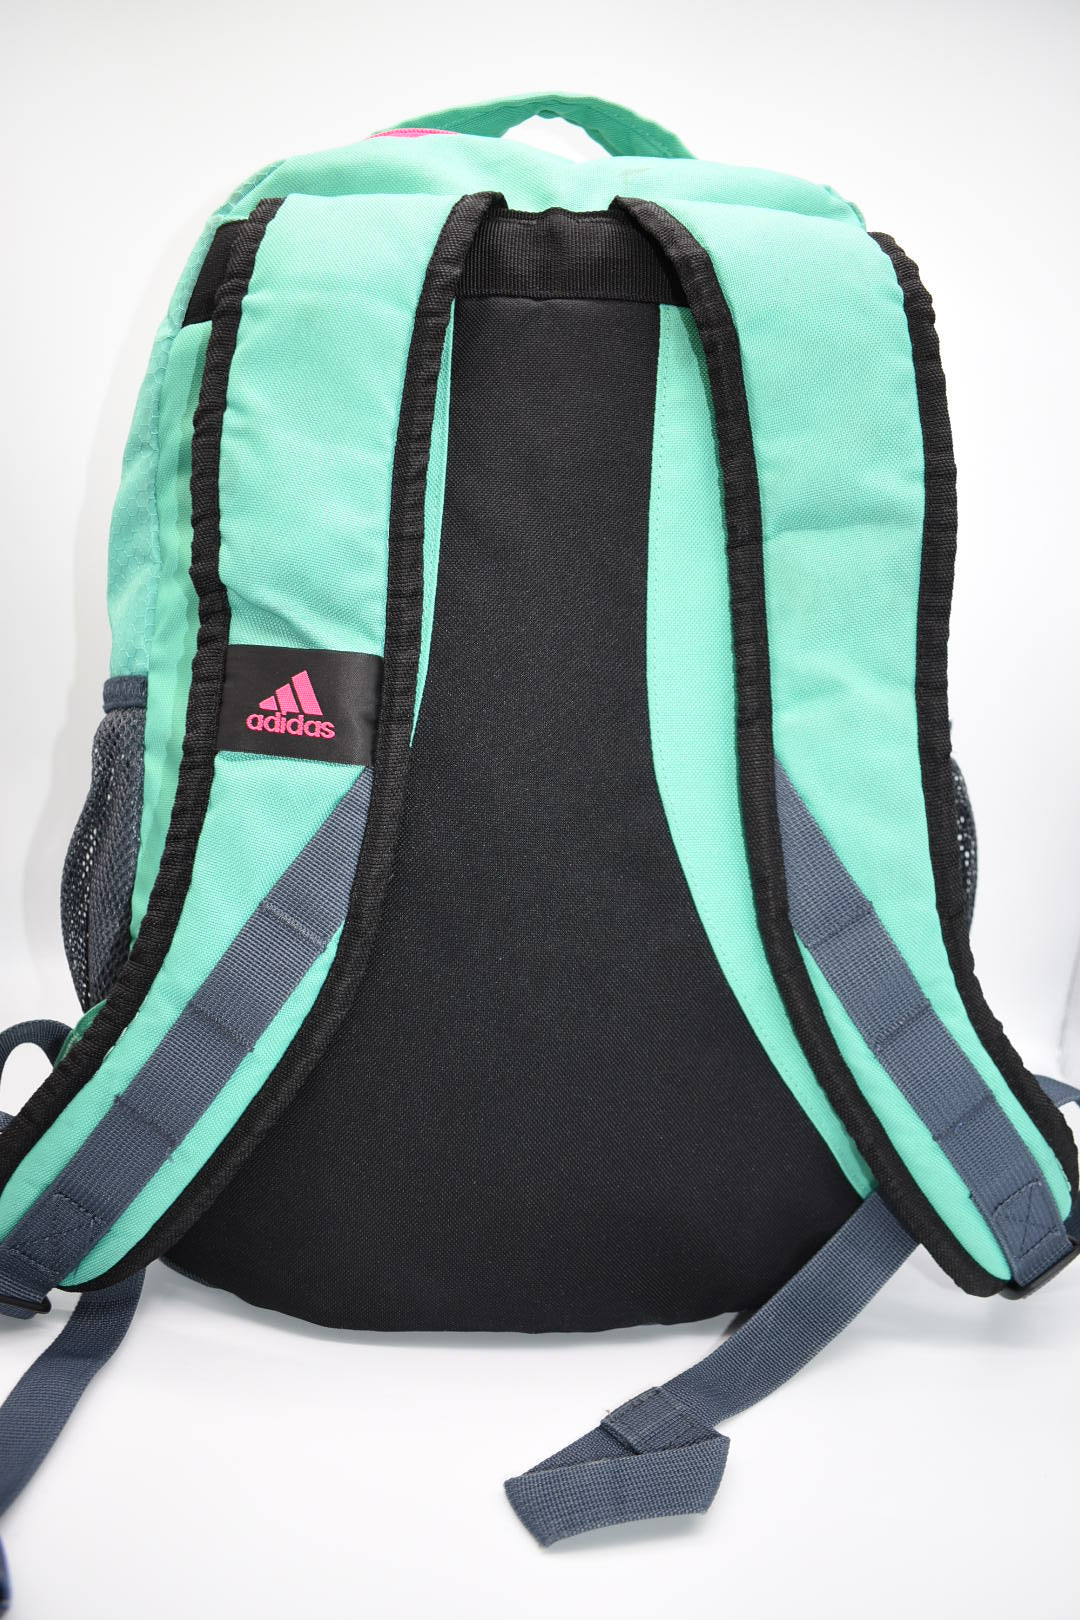 Adidas Teal & Pink Large Backpack